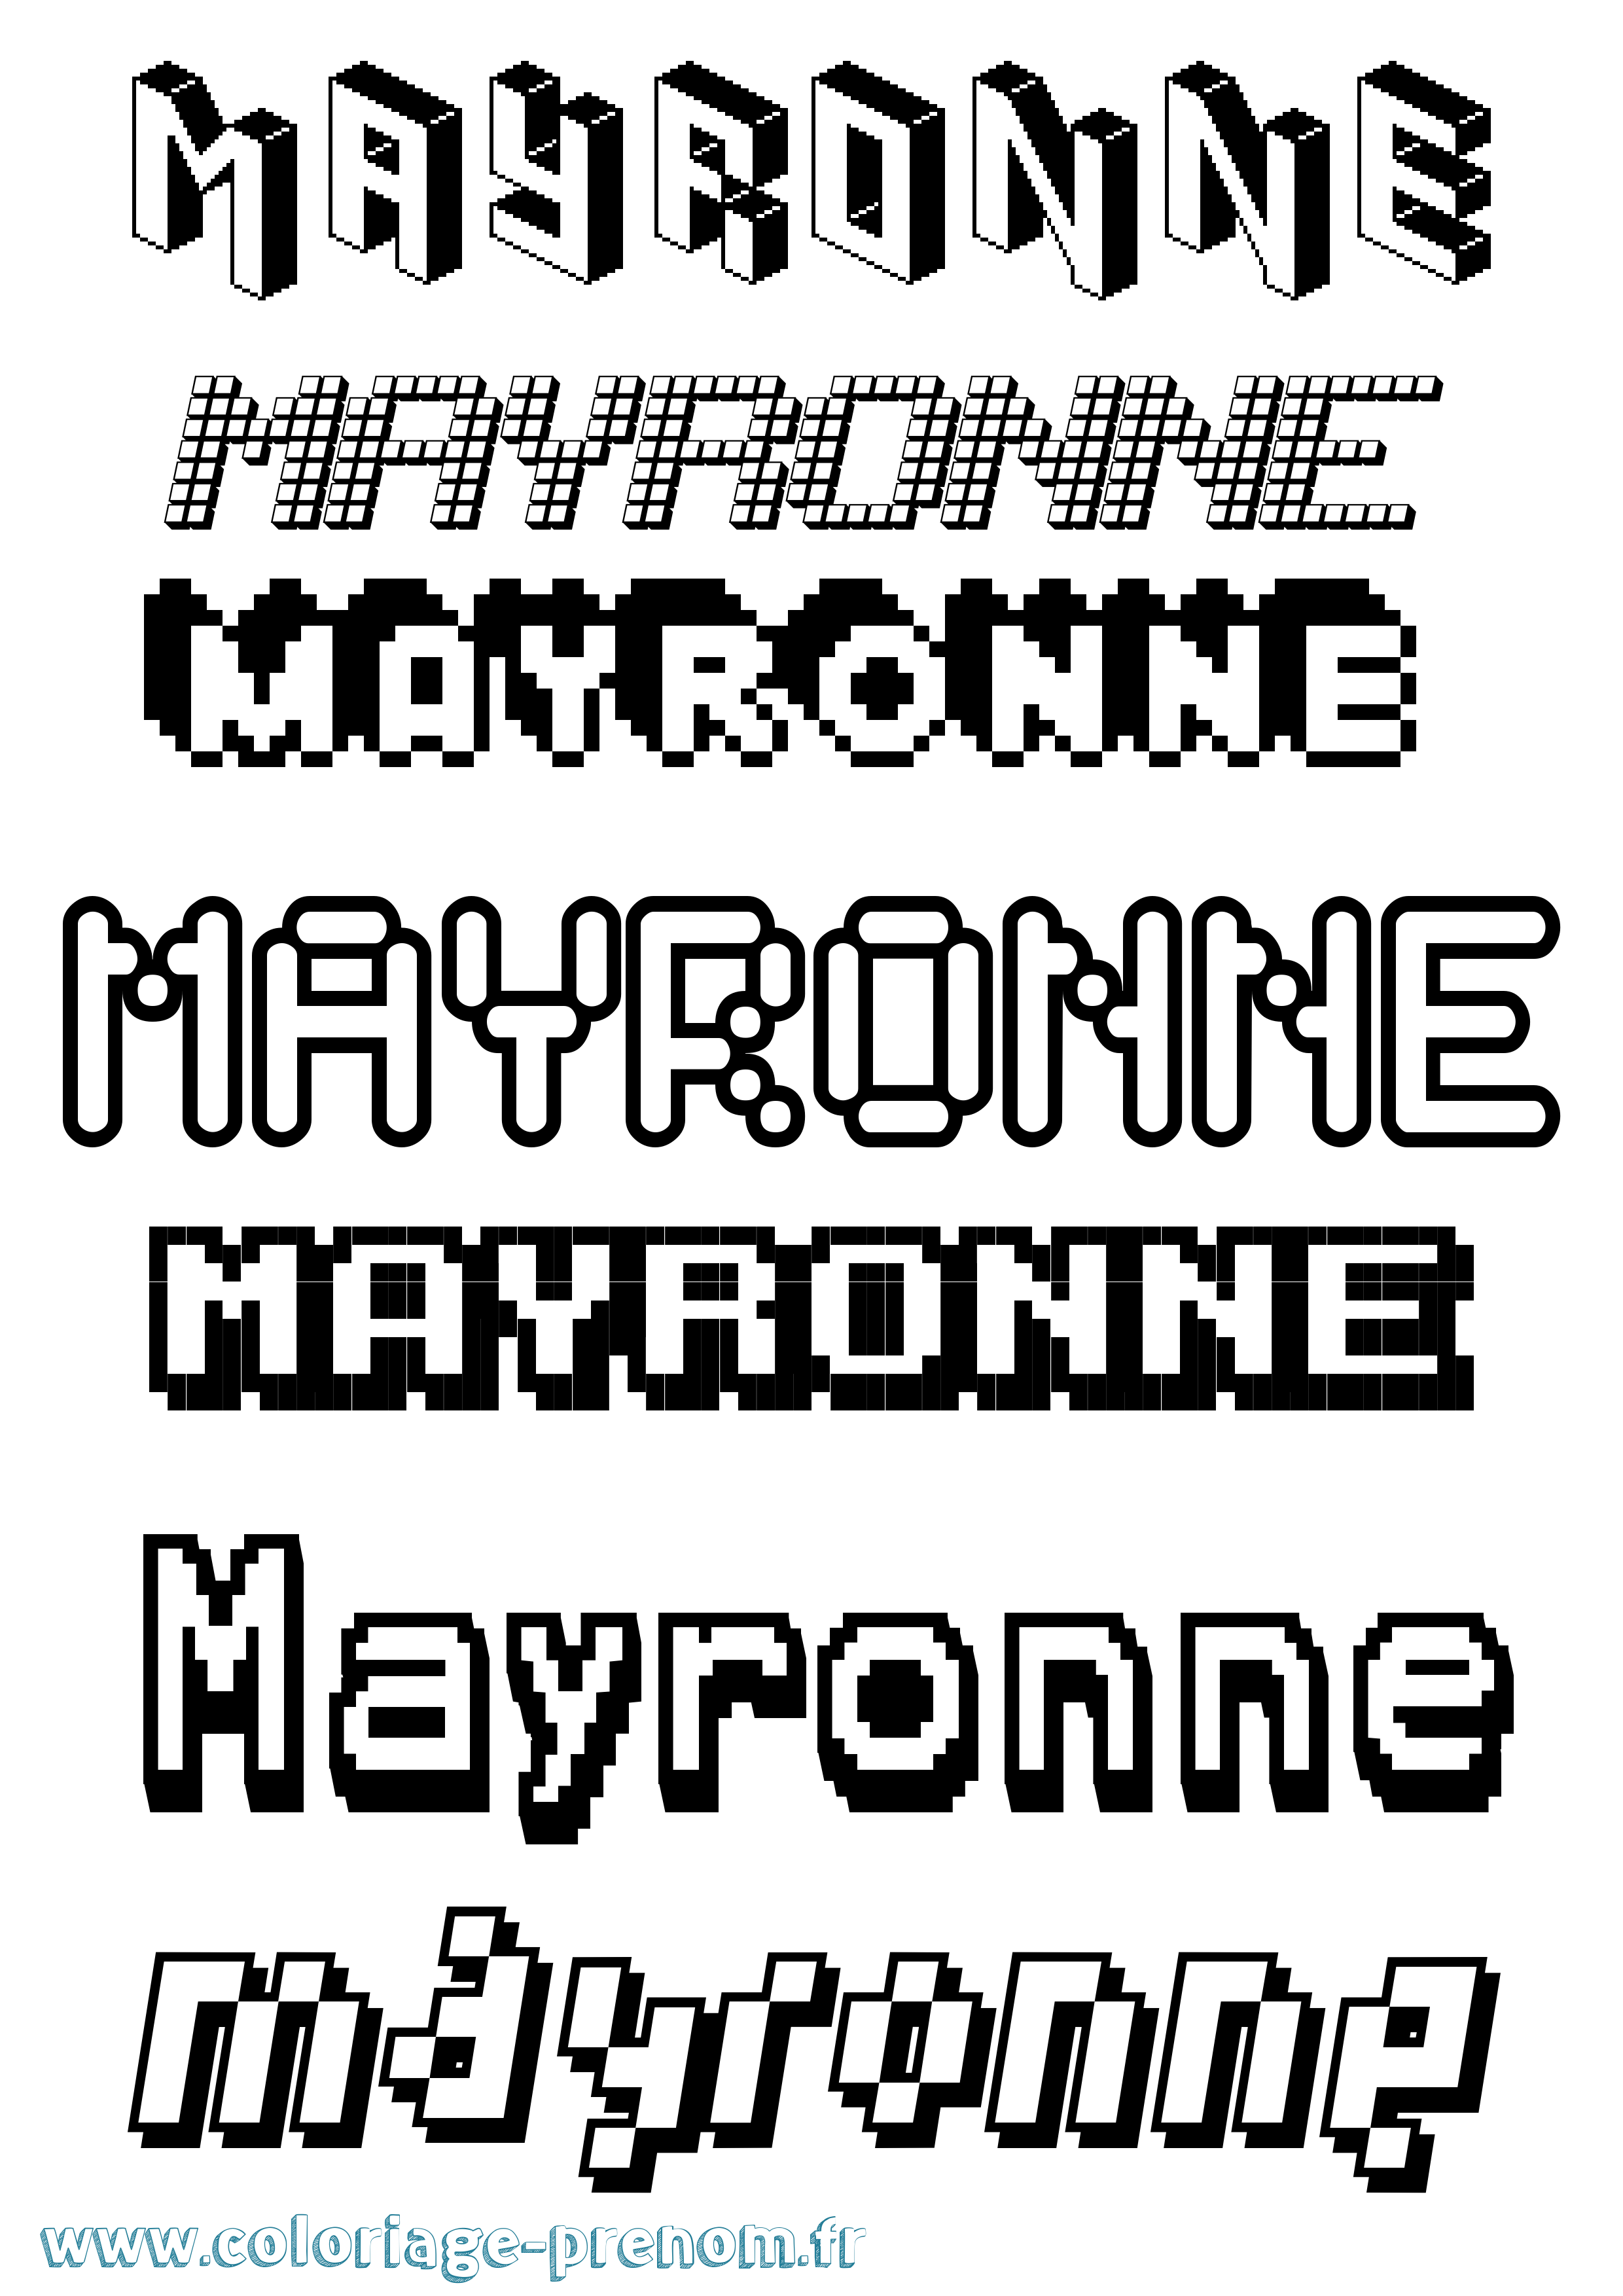 Coloriage prénom Mayronne Pixel